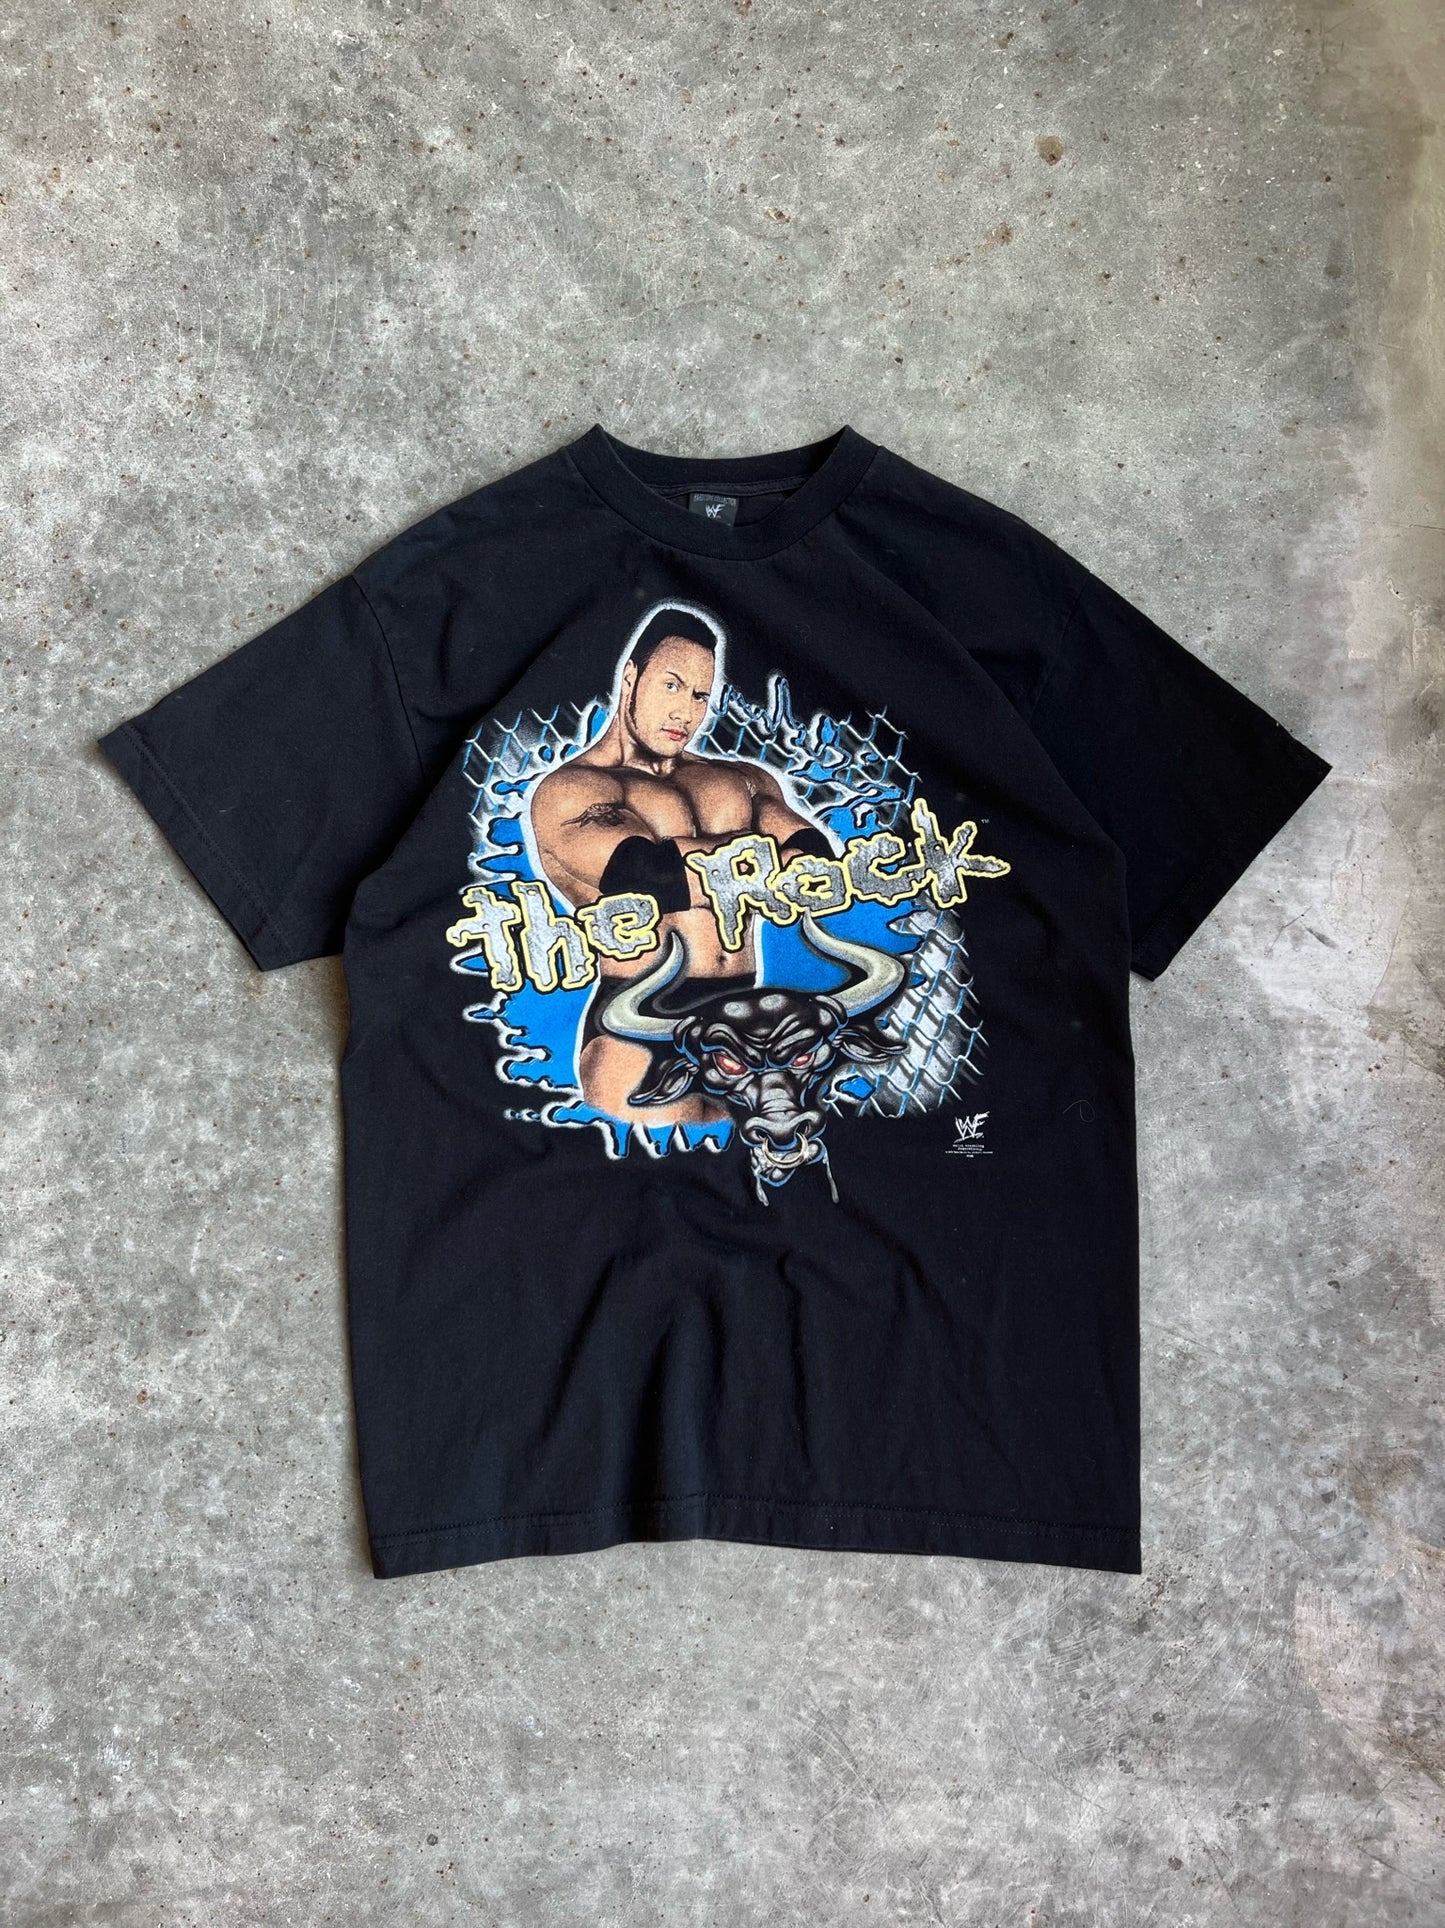 Vintage The Rock WWF shirt - XL